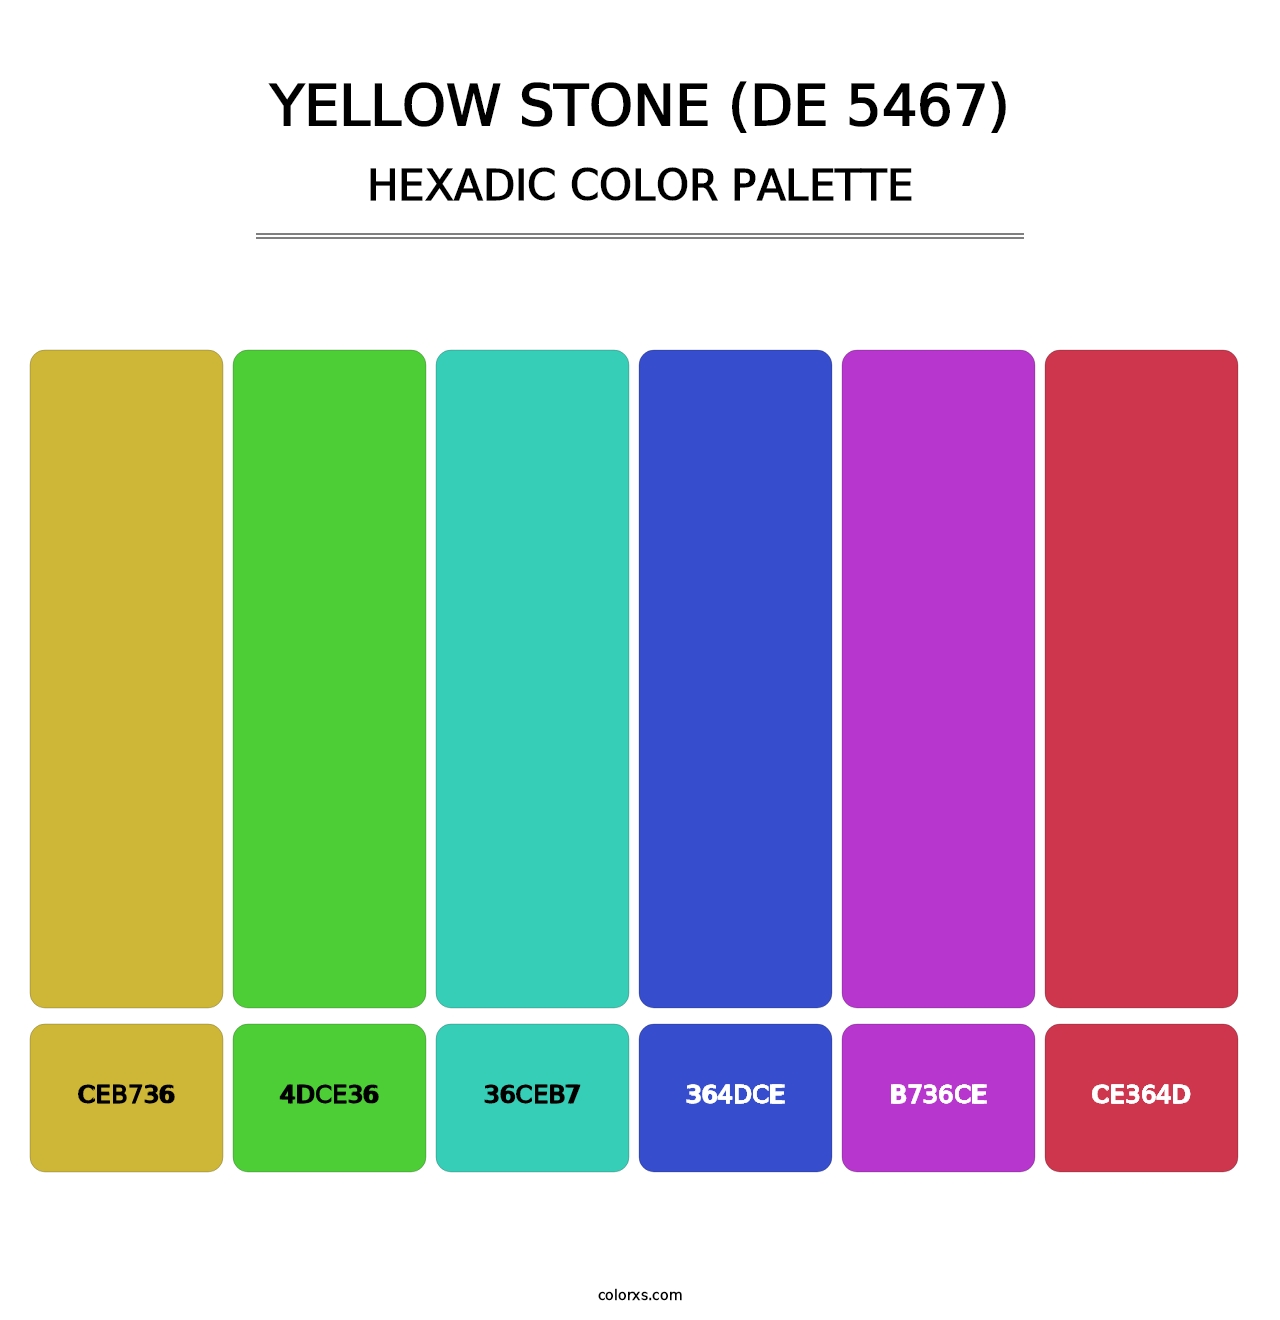 Yellow Stone (DE 5467) - Hexadic Color Palette